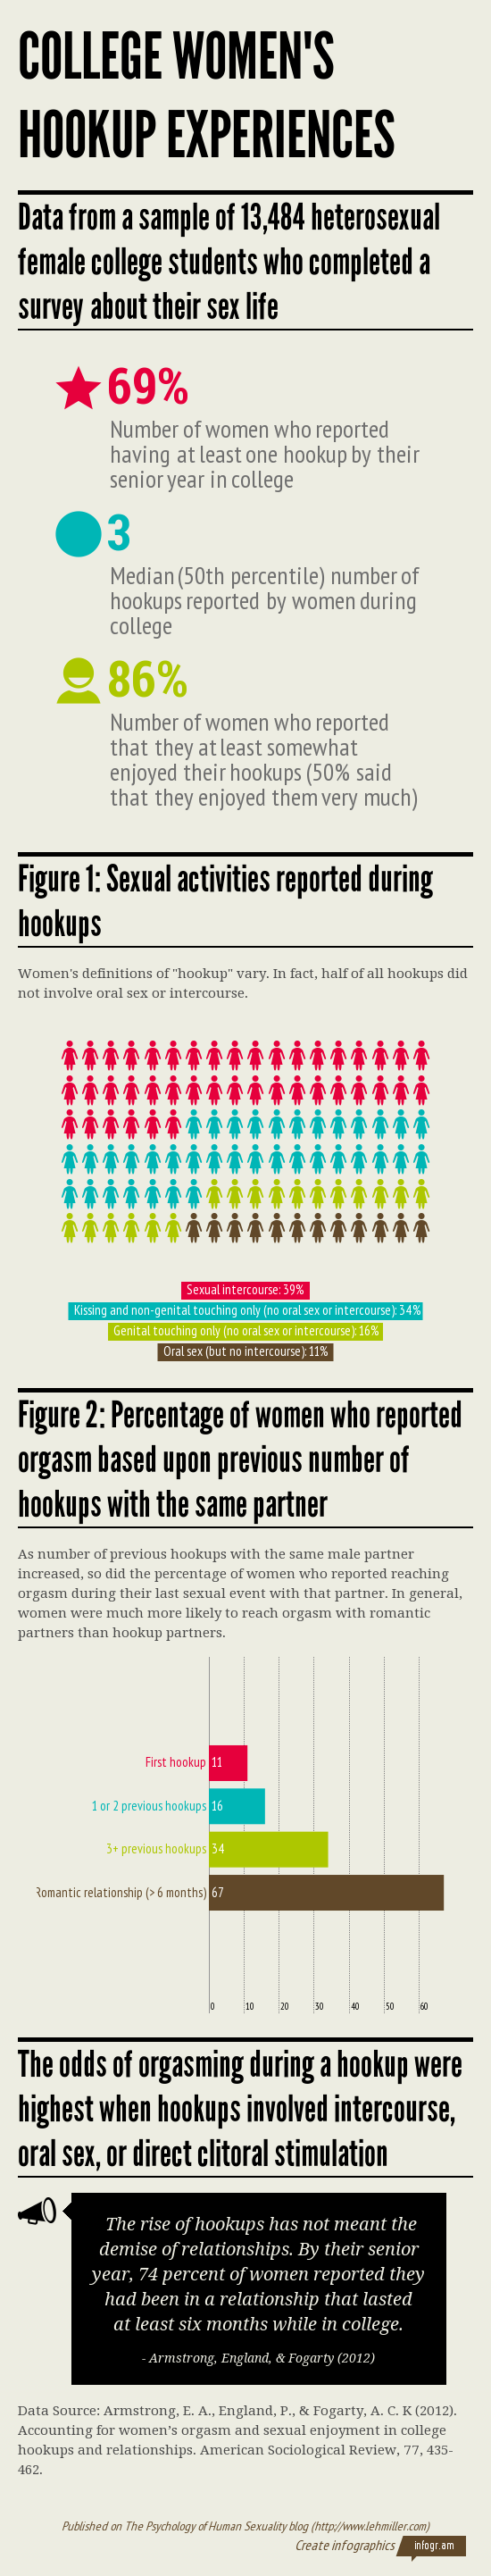 Infographic summarizing data on college women's hookup experiences